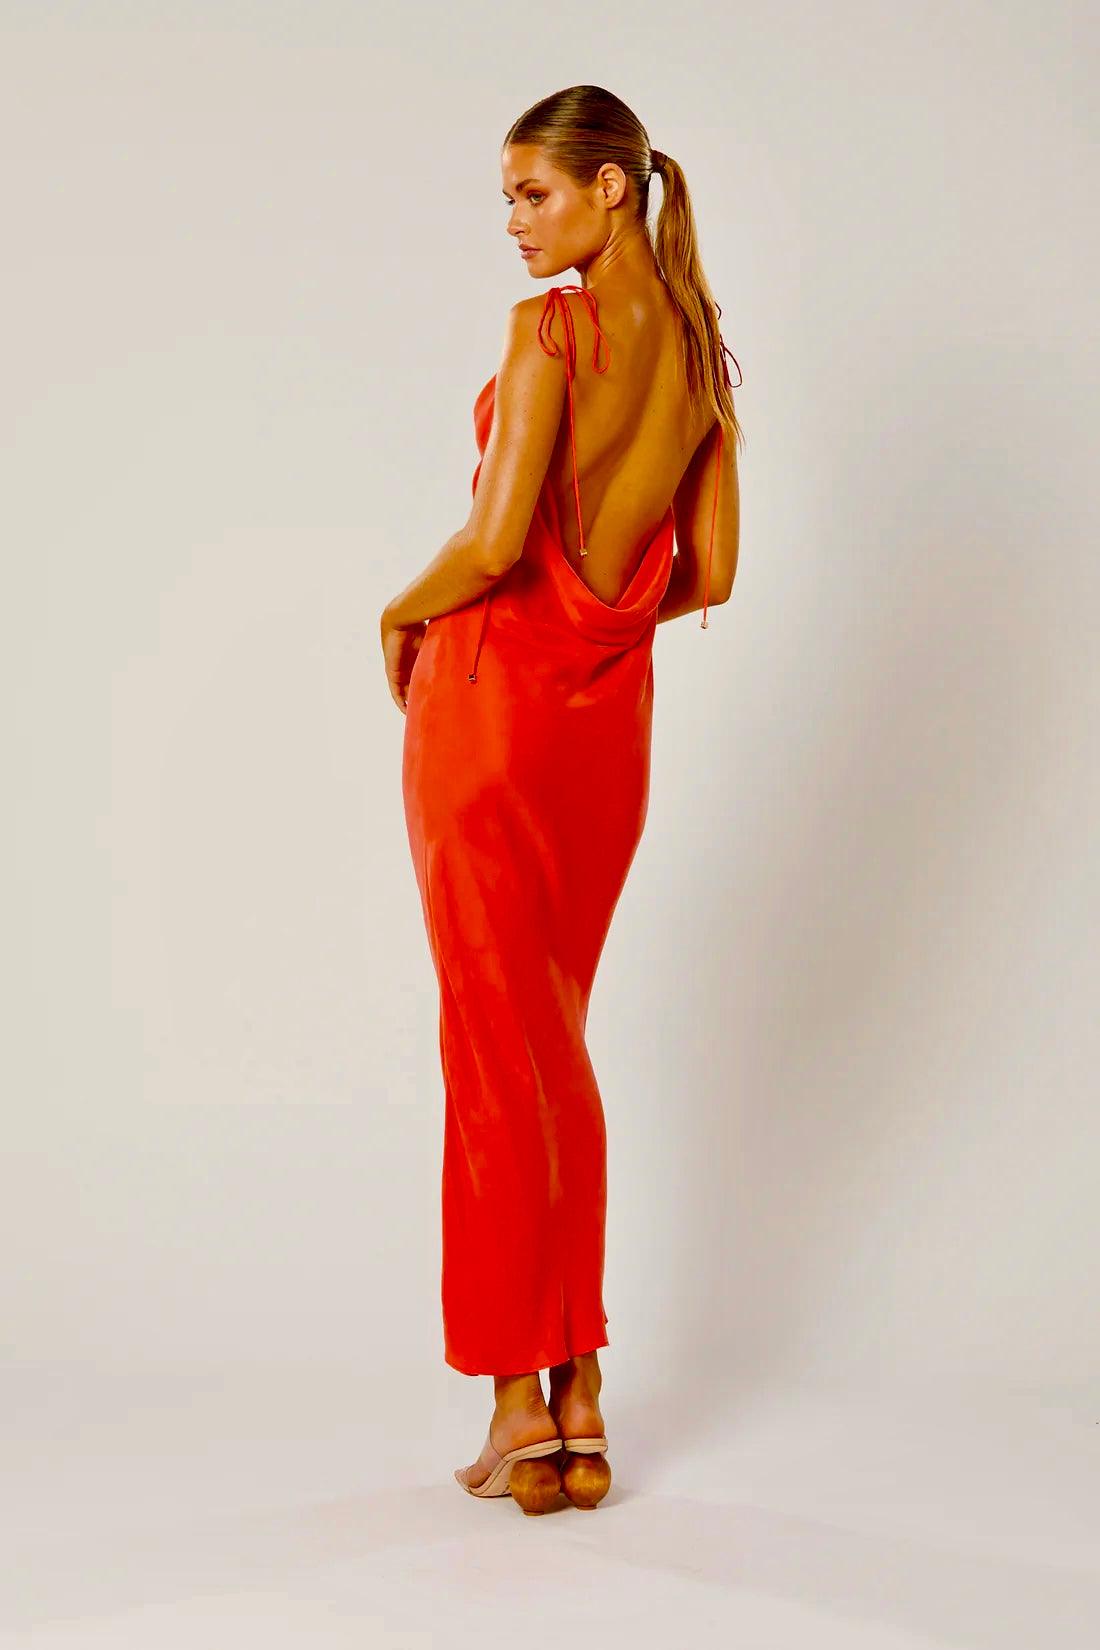 Winona - Marcella Cowl Dress in Scarlet - OutDazl